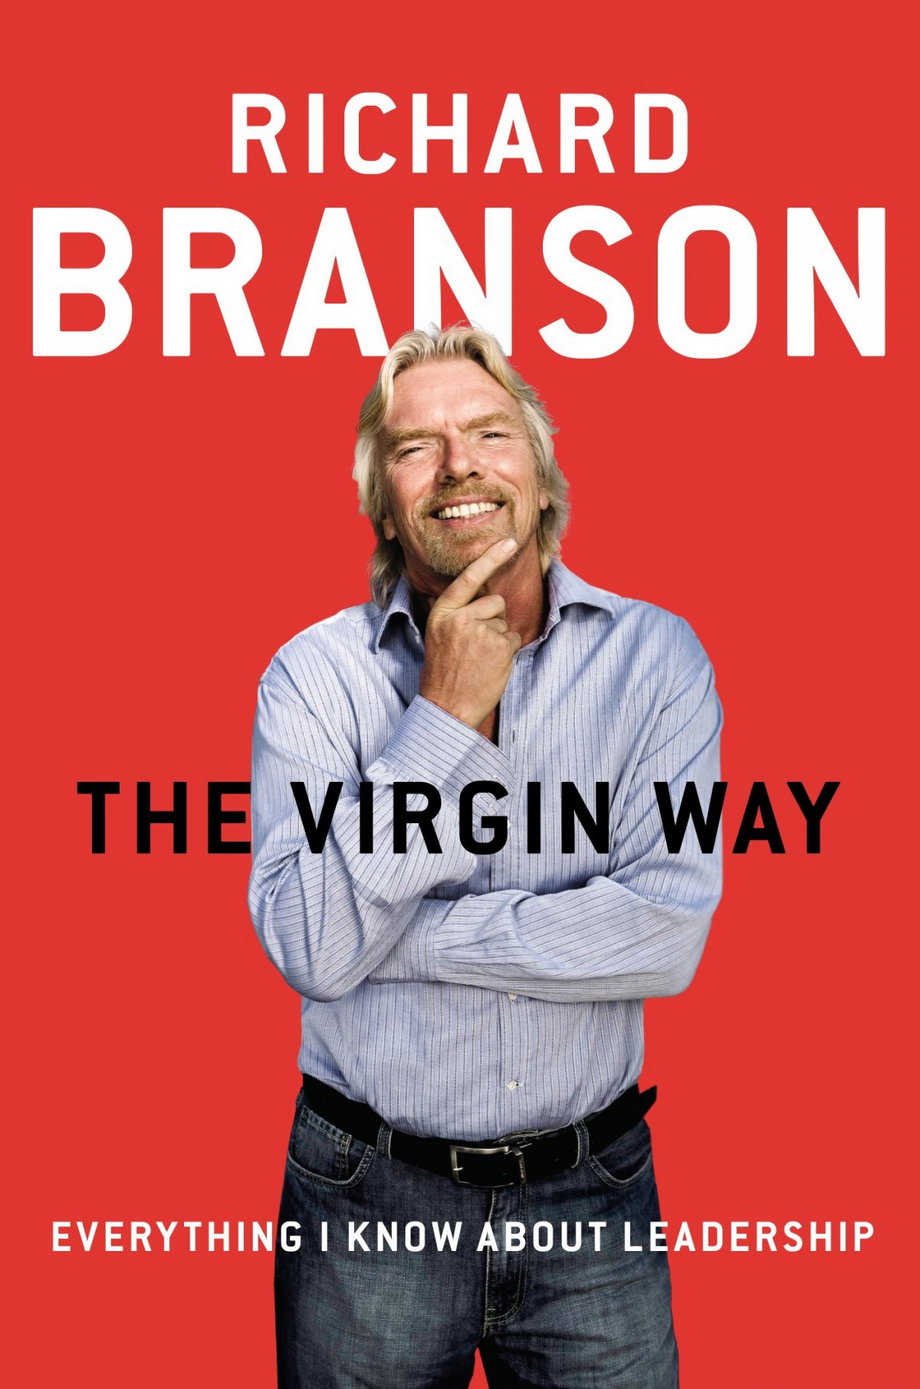 Richard Branson "The Virgin Way"